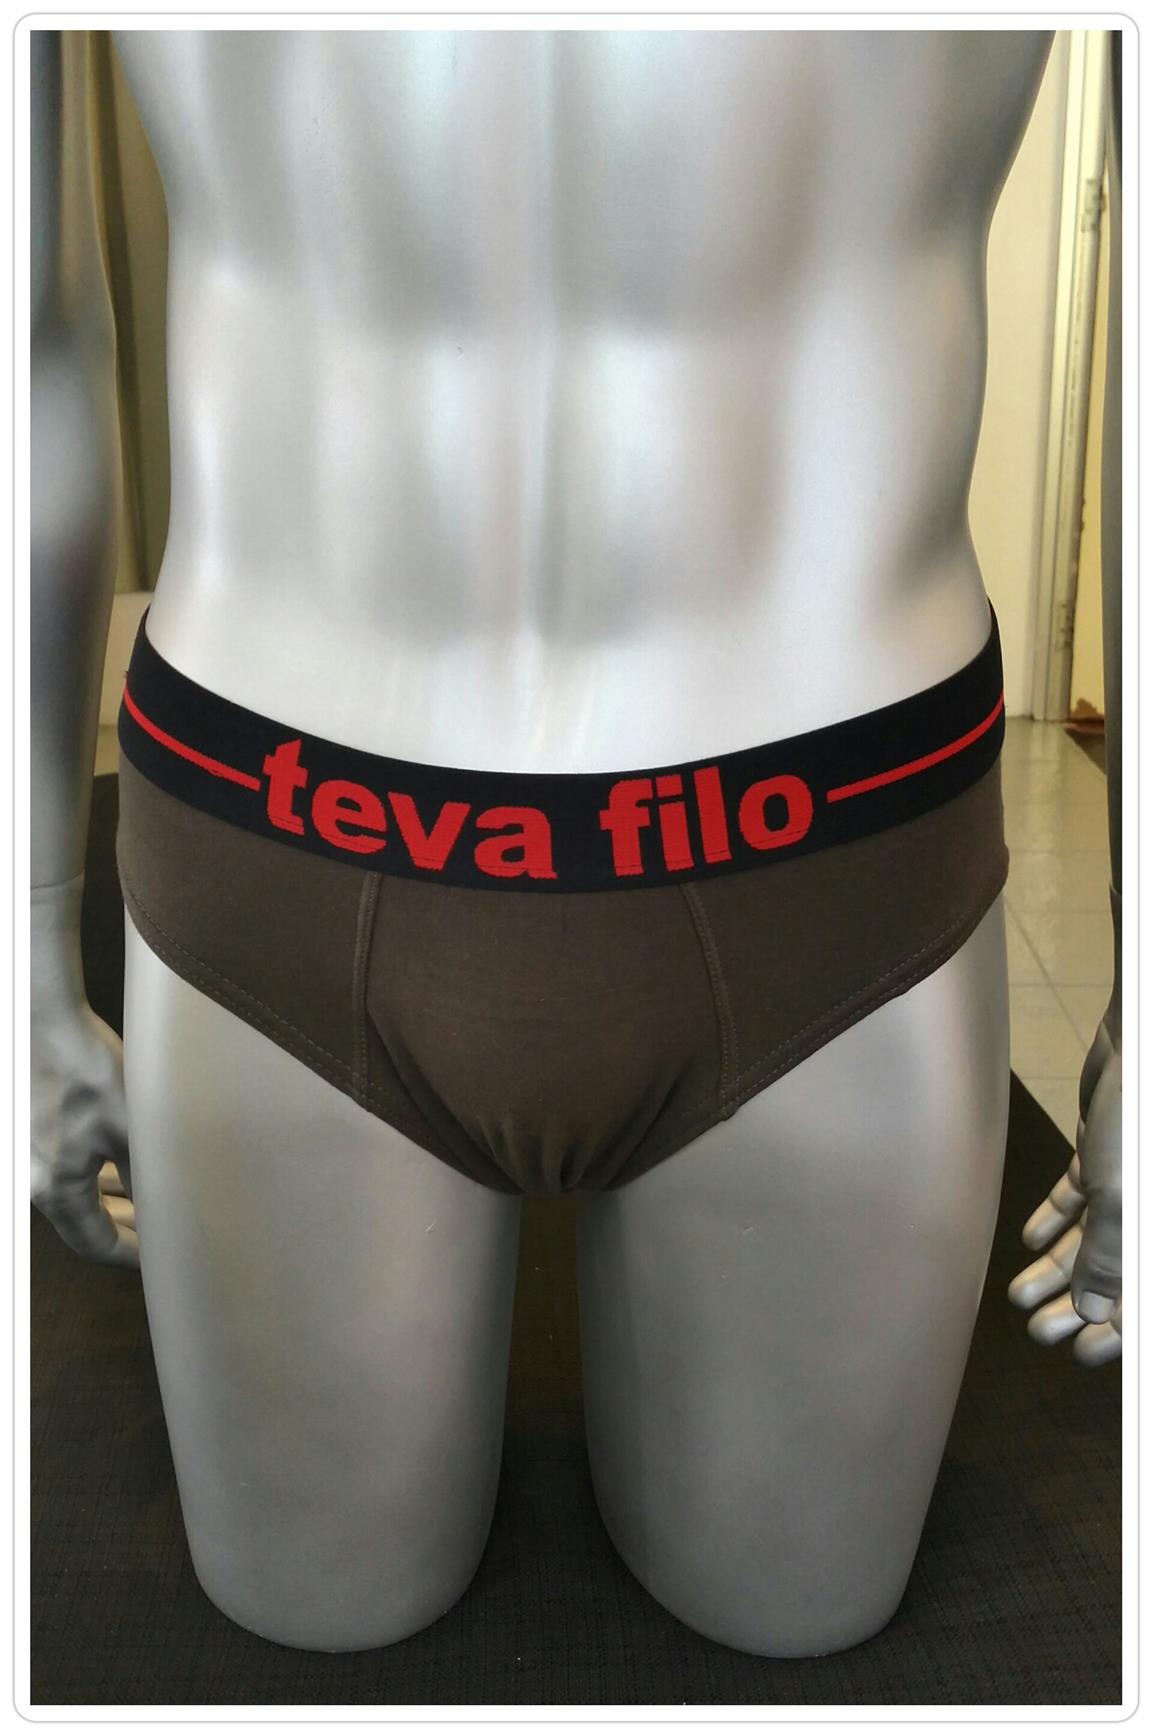 [TEVA FILO] Men's Briefs Underwear - TF312  (3 pcs pack briefs)